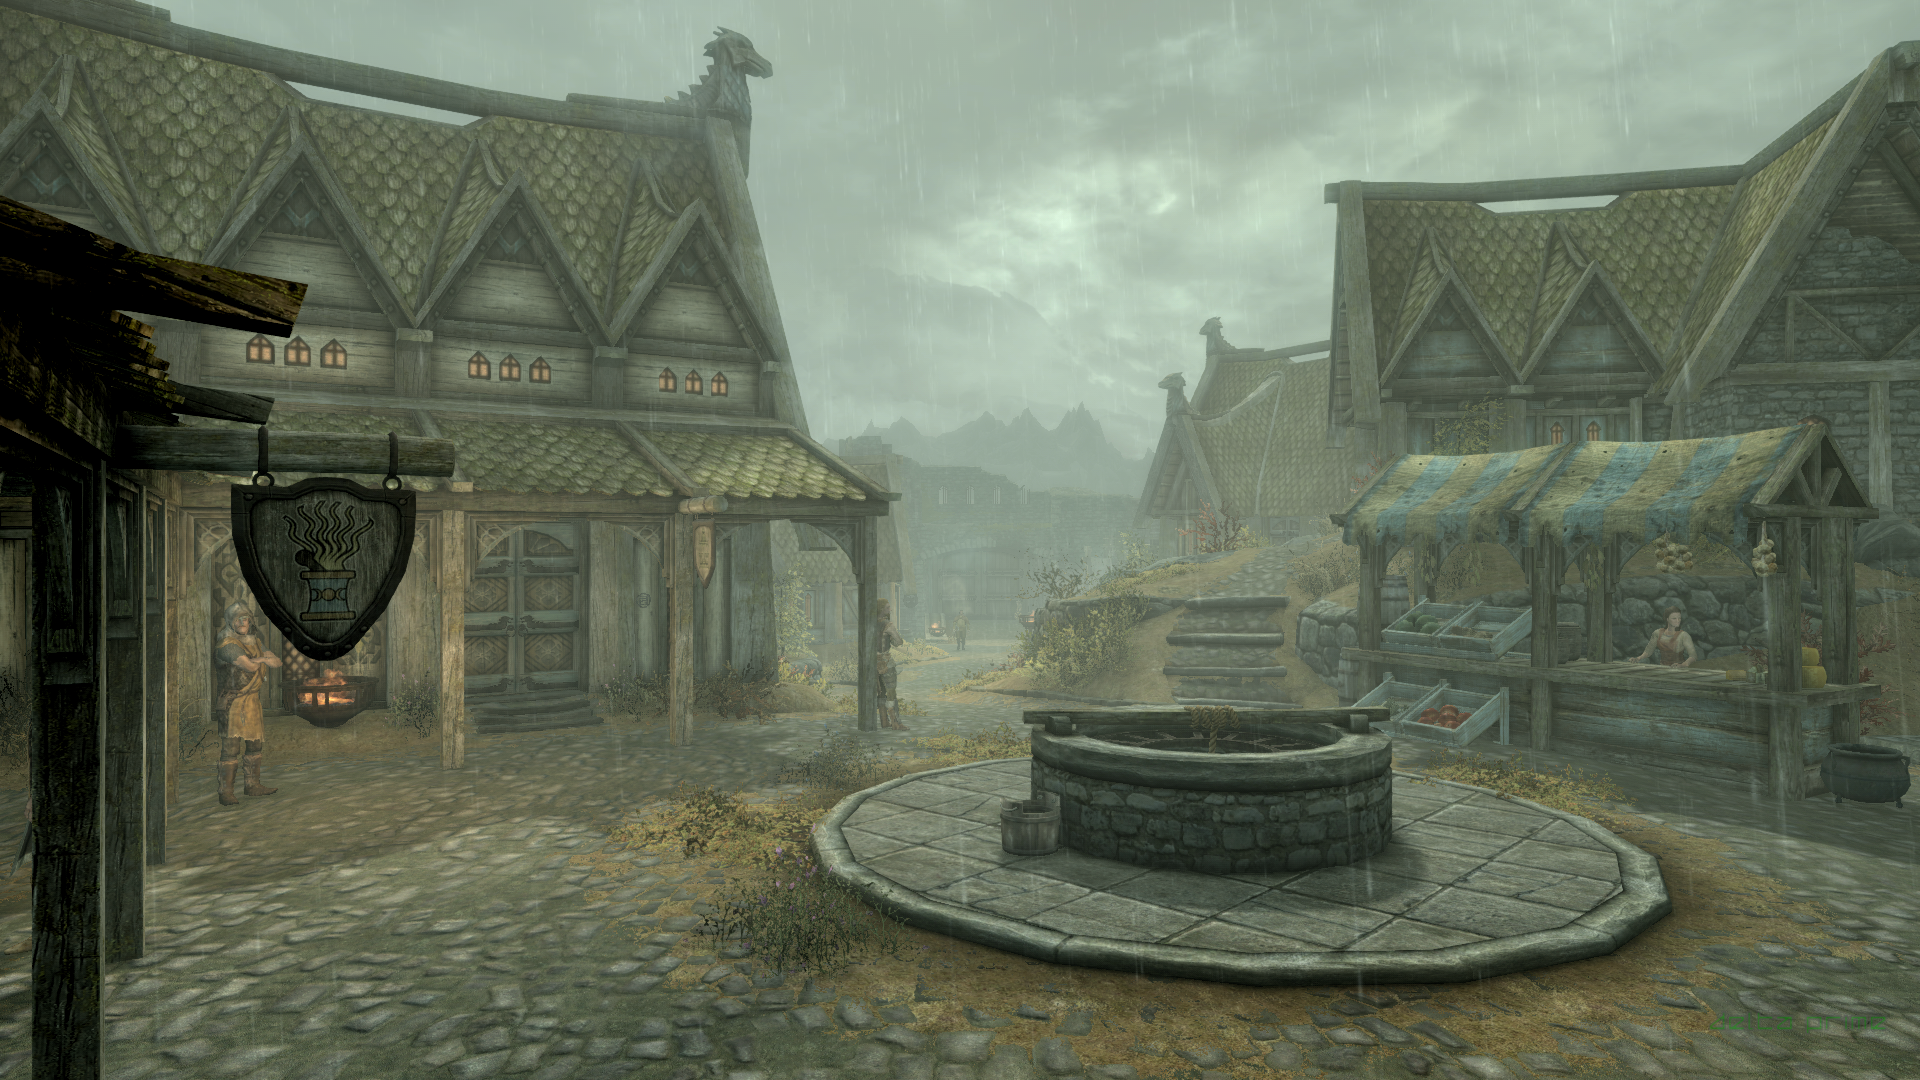 General 1920x1080 Skyrim Remastered The Elder Scrolls V: Skyrim PC gaming screen shot Whiterun rain overcast Market